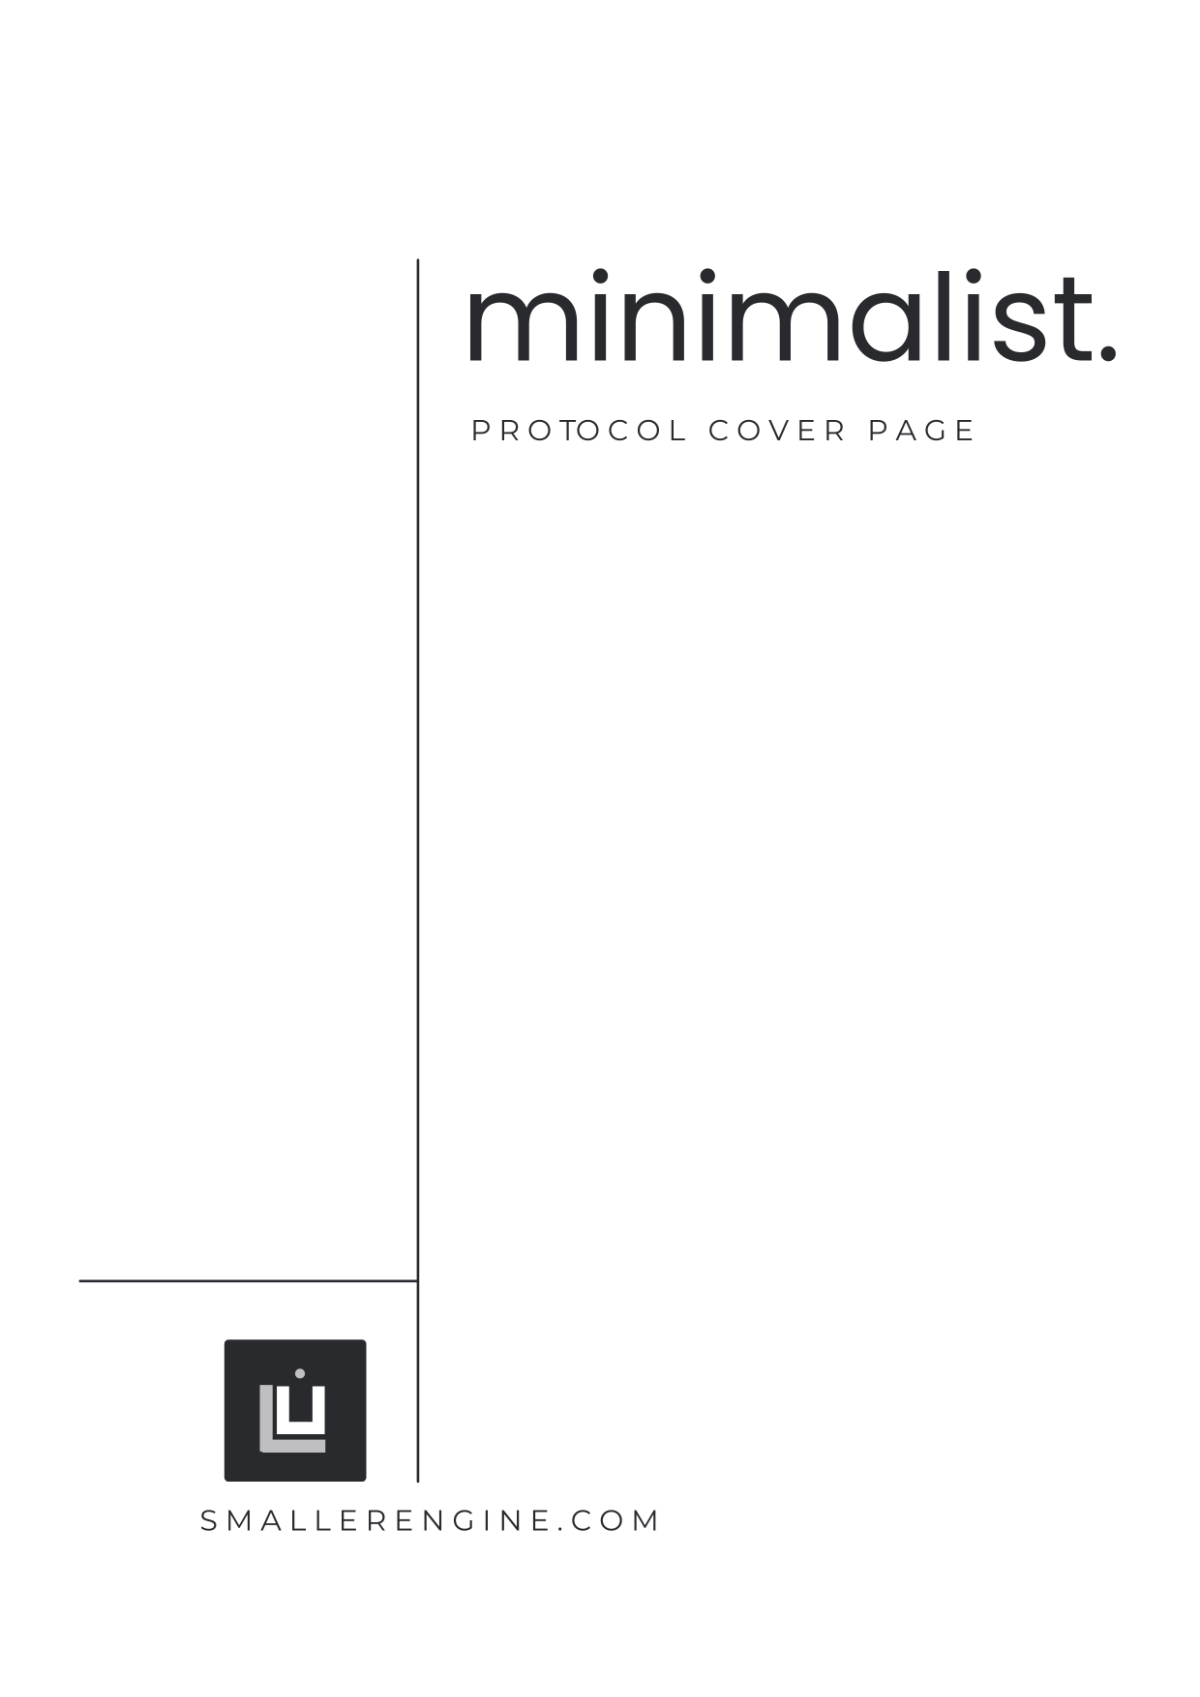 Minimalist Protocol Cover Page